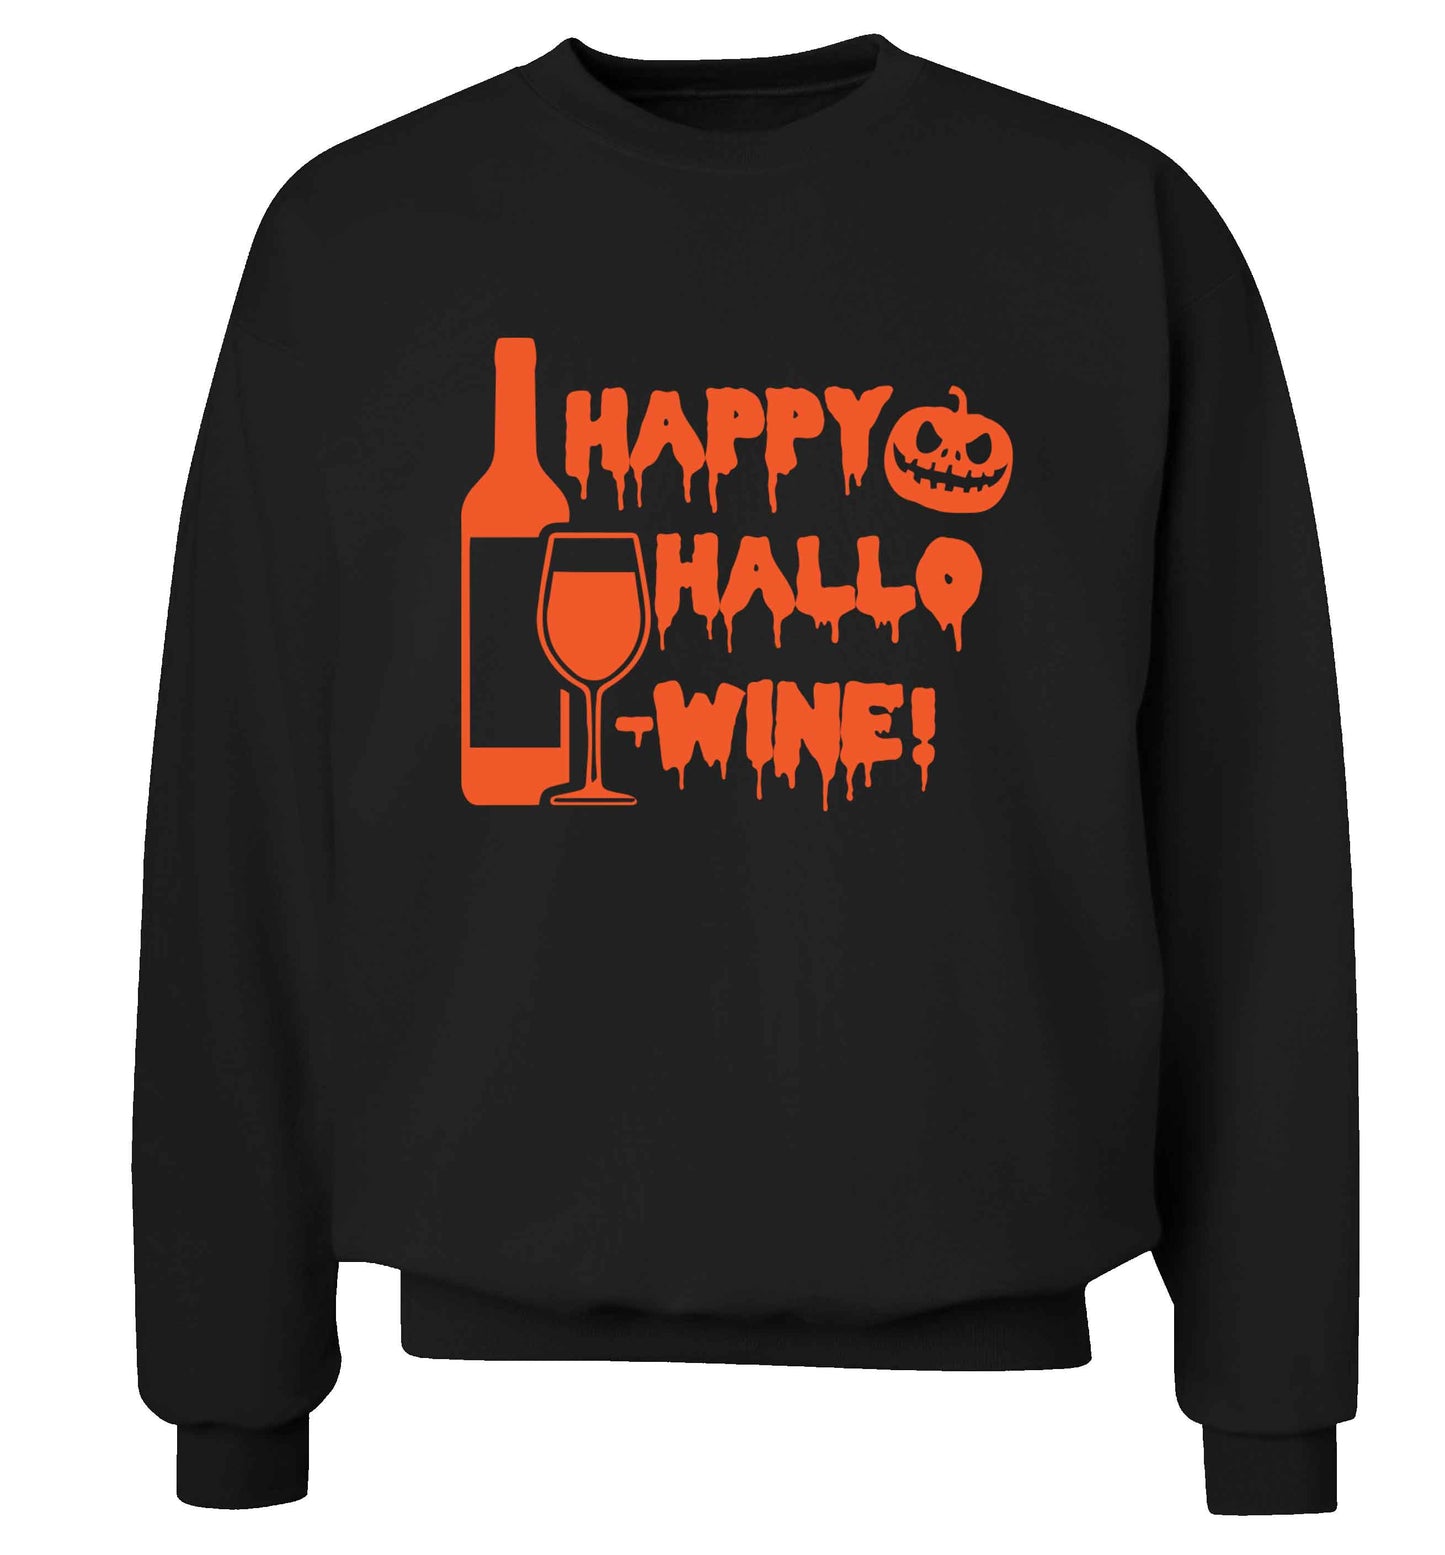 Happy hallow-wine Adult's unisex black Sweater 2XL